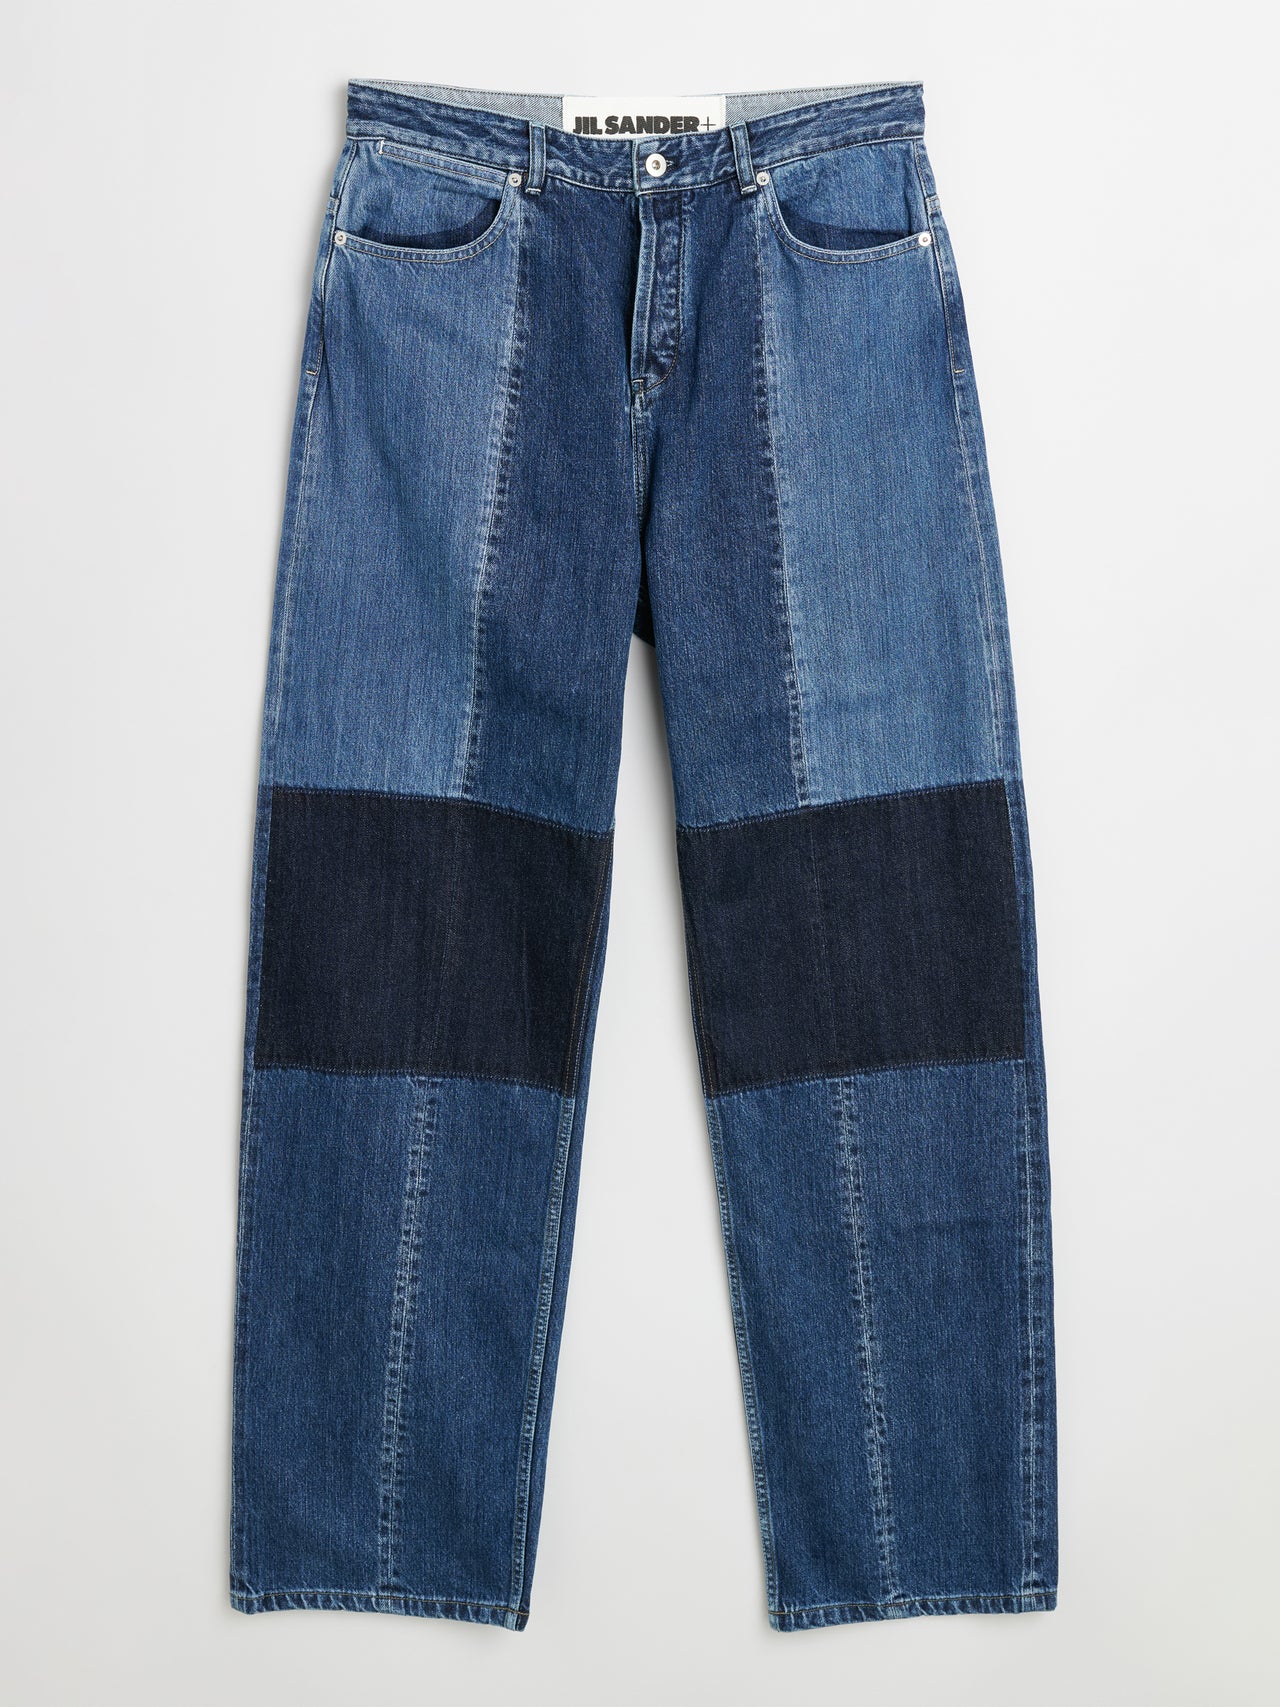 Jil Sander+ Denim Trouser Cobalt Blue